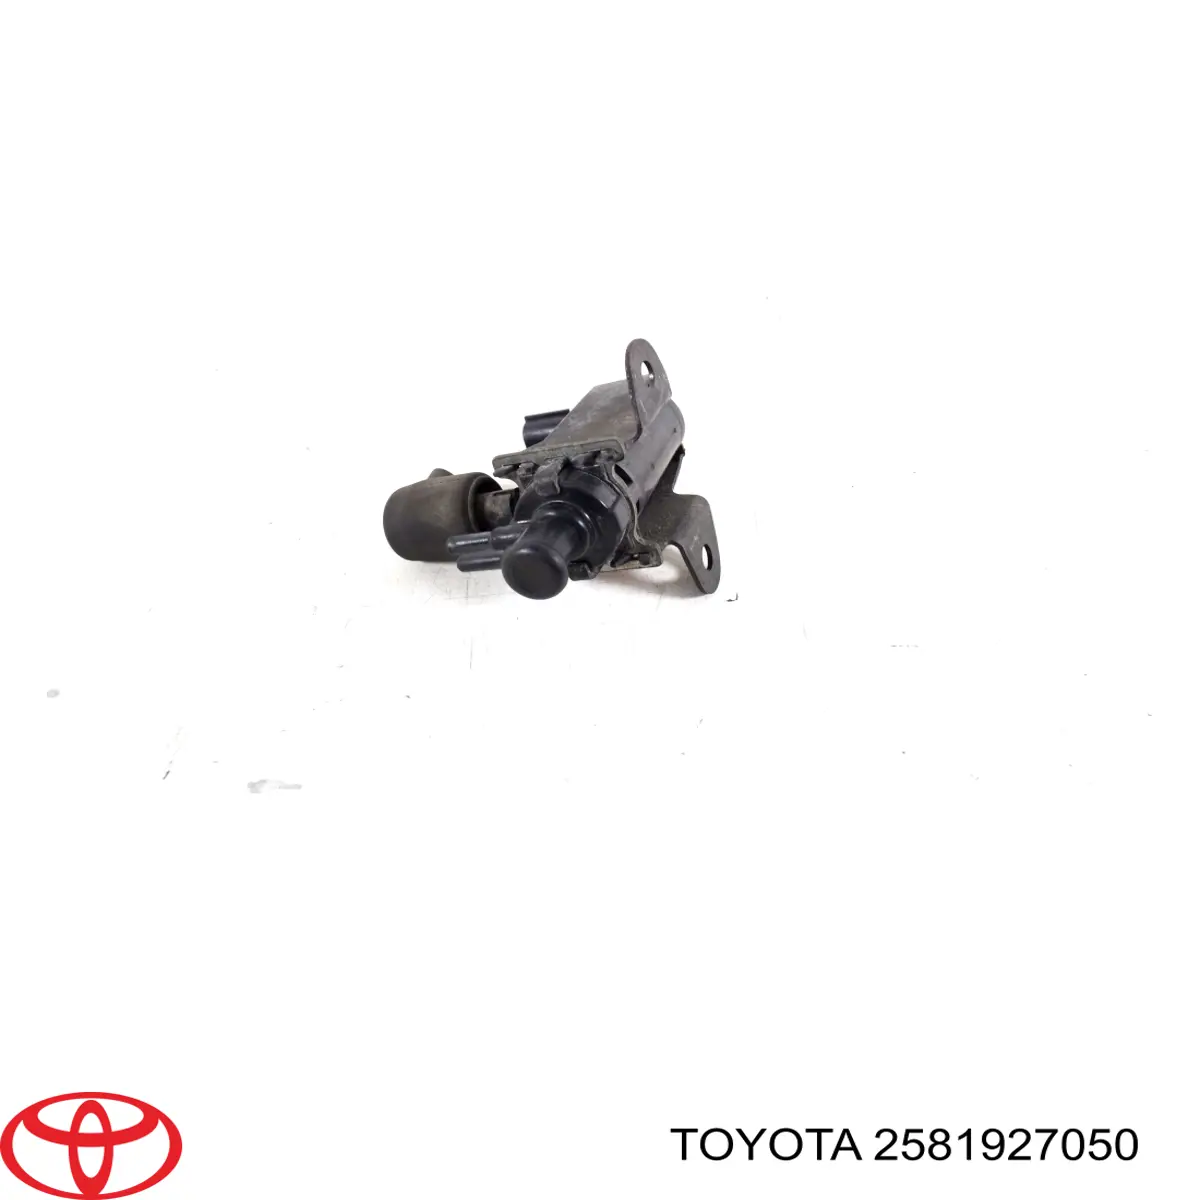 2581927050 Toyota valvula de recirculacion de aire de carga de turbina